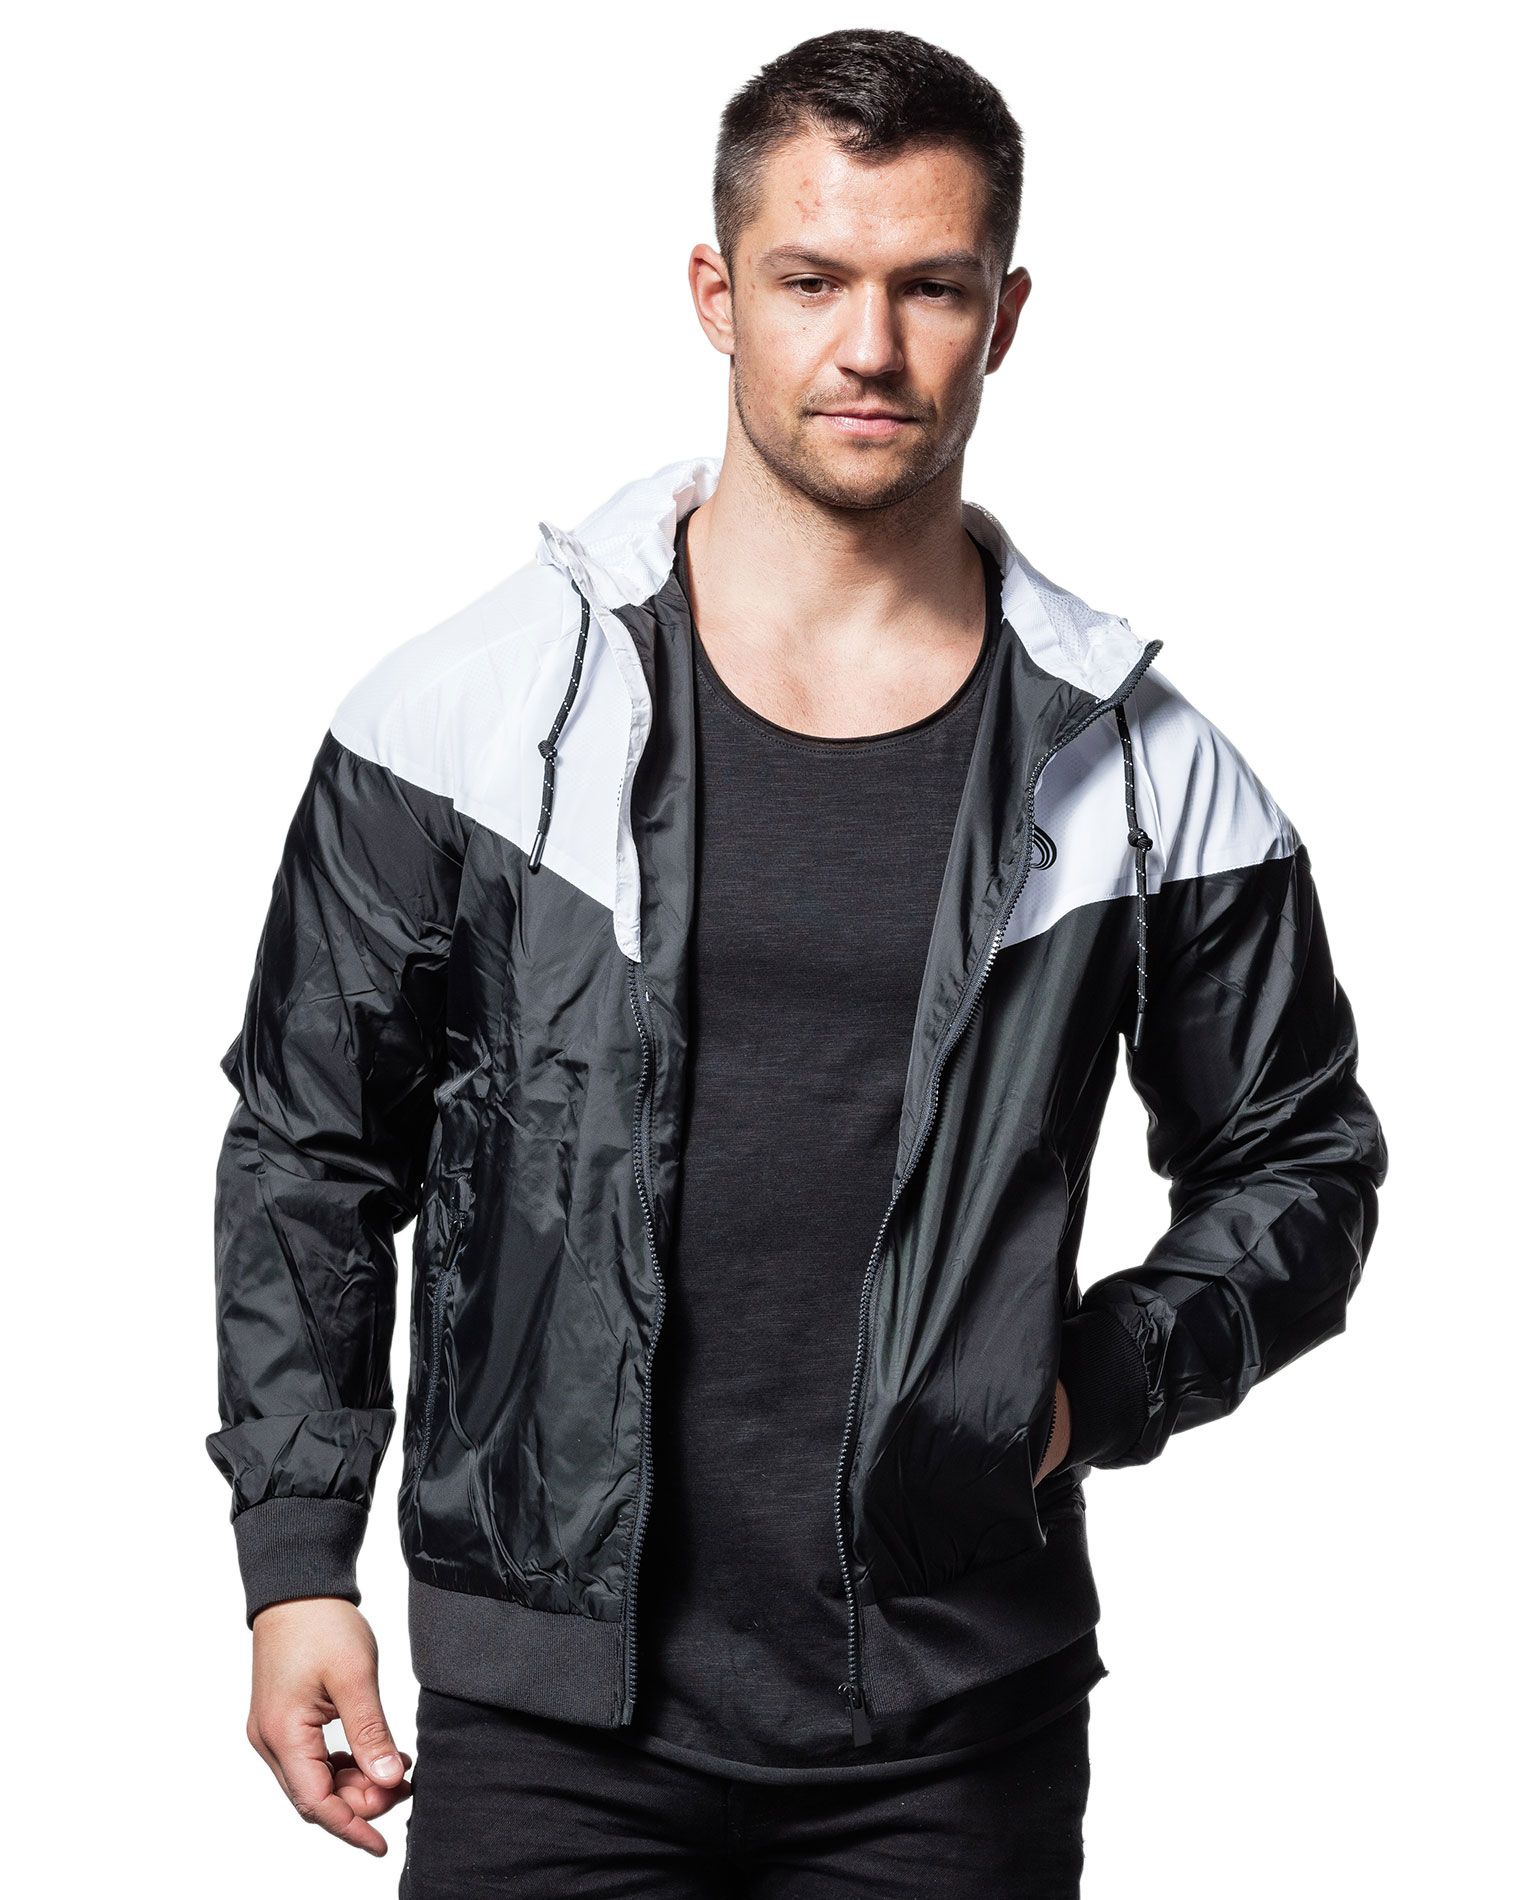 Action Jacket BlackWhite Ryderwear - 4684 - Lightweight Jackets - Jerone